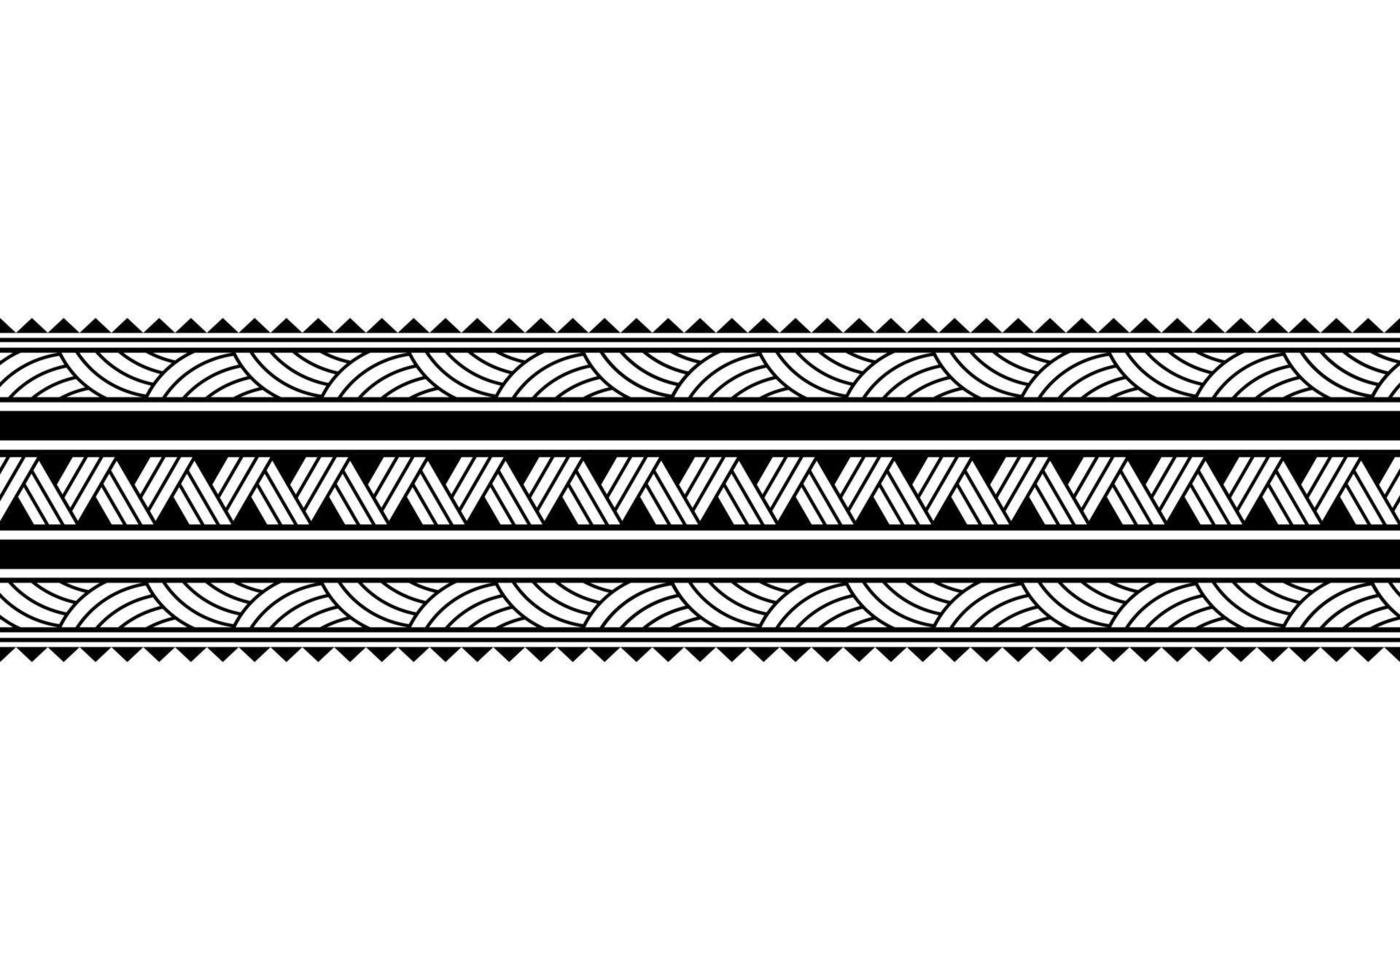 Maori polynesisches Tattoo-Armband. Stammes-Ärmel nahtloser Mustervektor. vektor